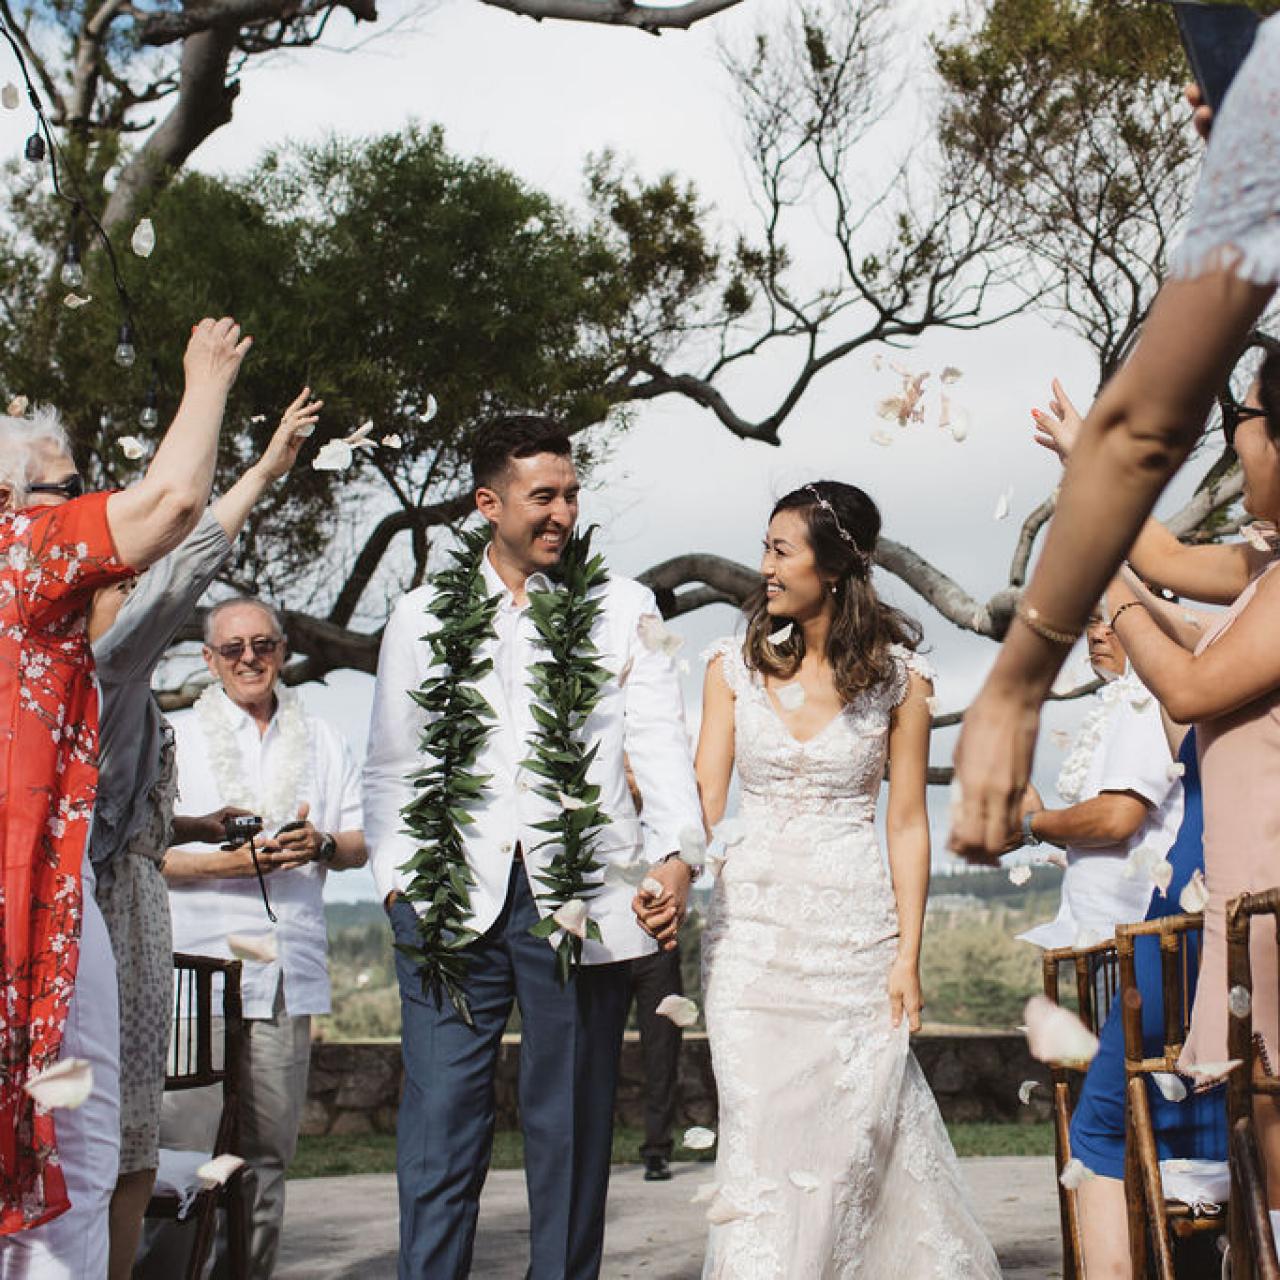 Carli Lloyd Marries High School Sweetheart in Mexican Wedding